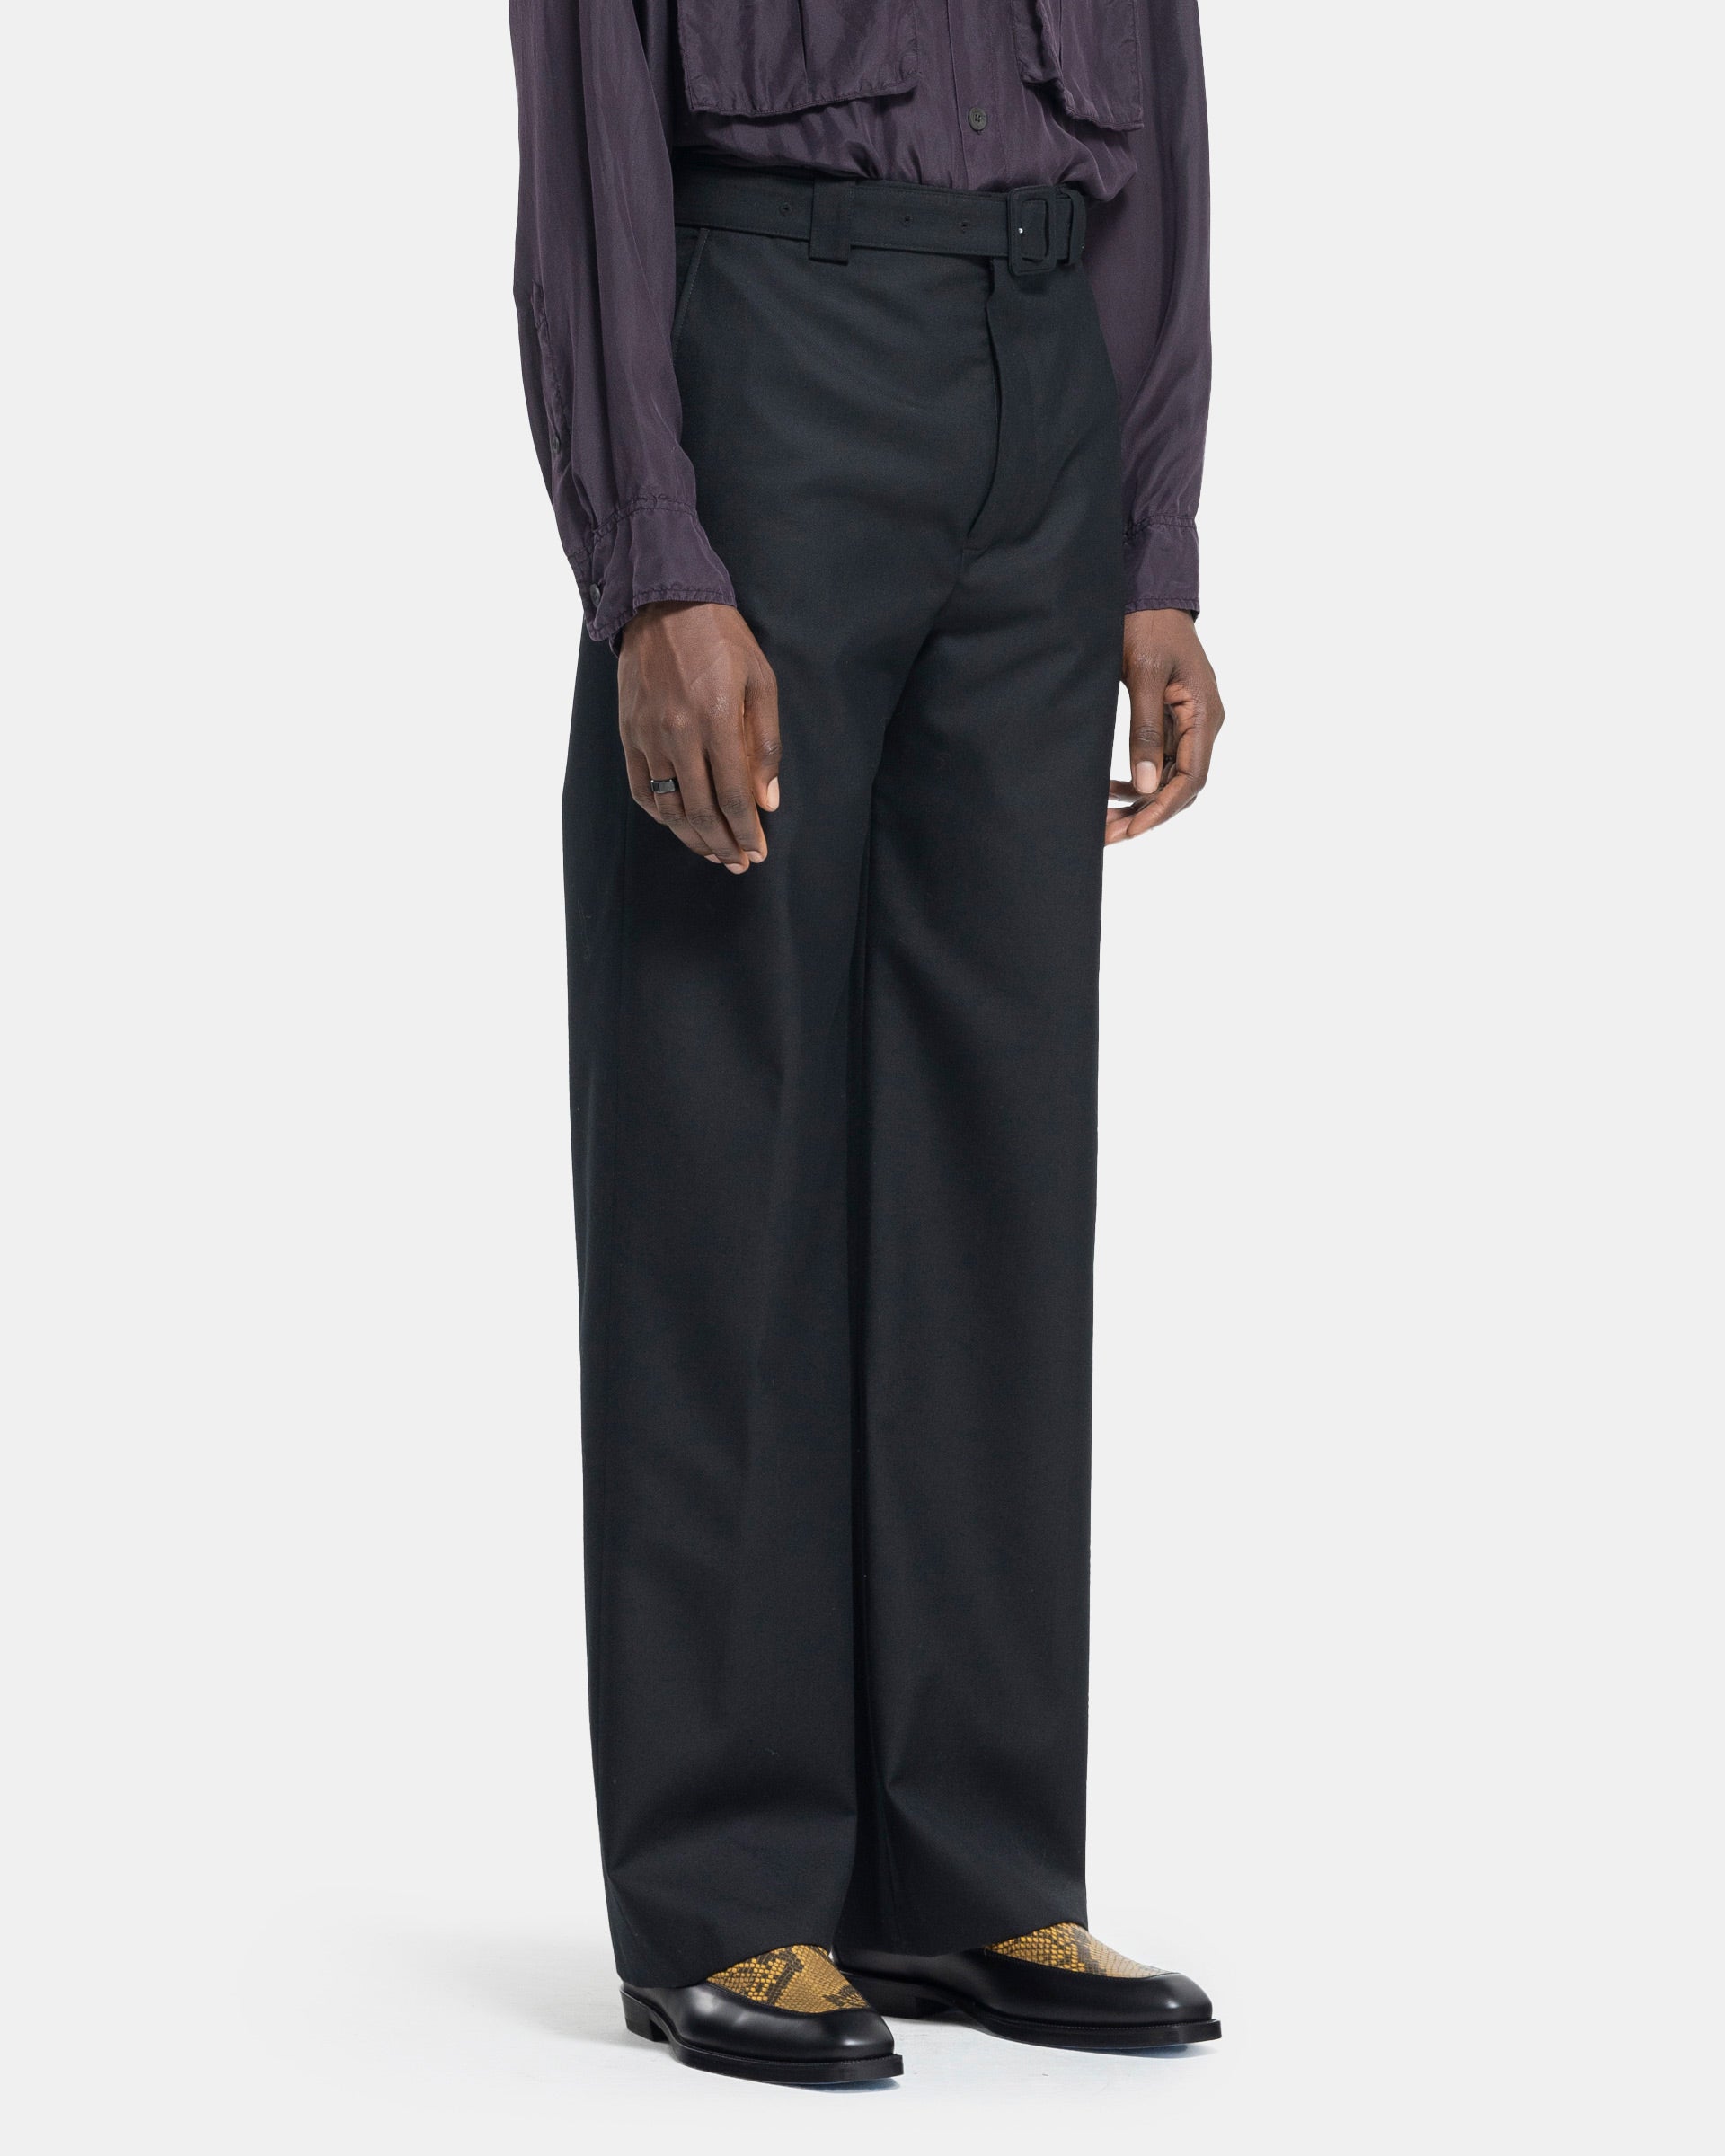 Model wearing Dries Van Noten Paulson Pants in Black on a white background